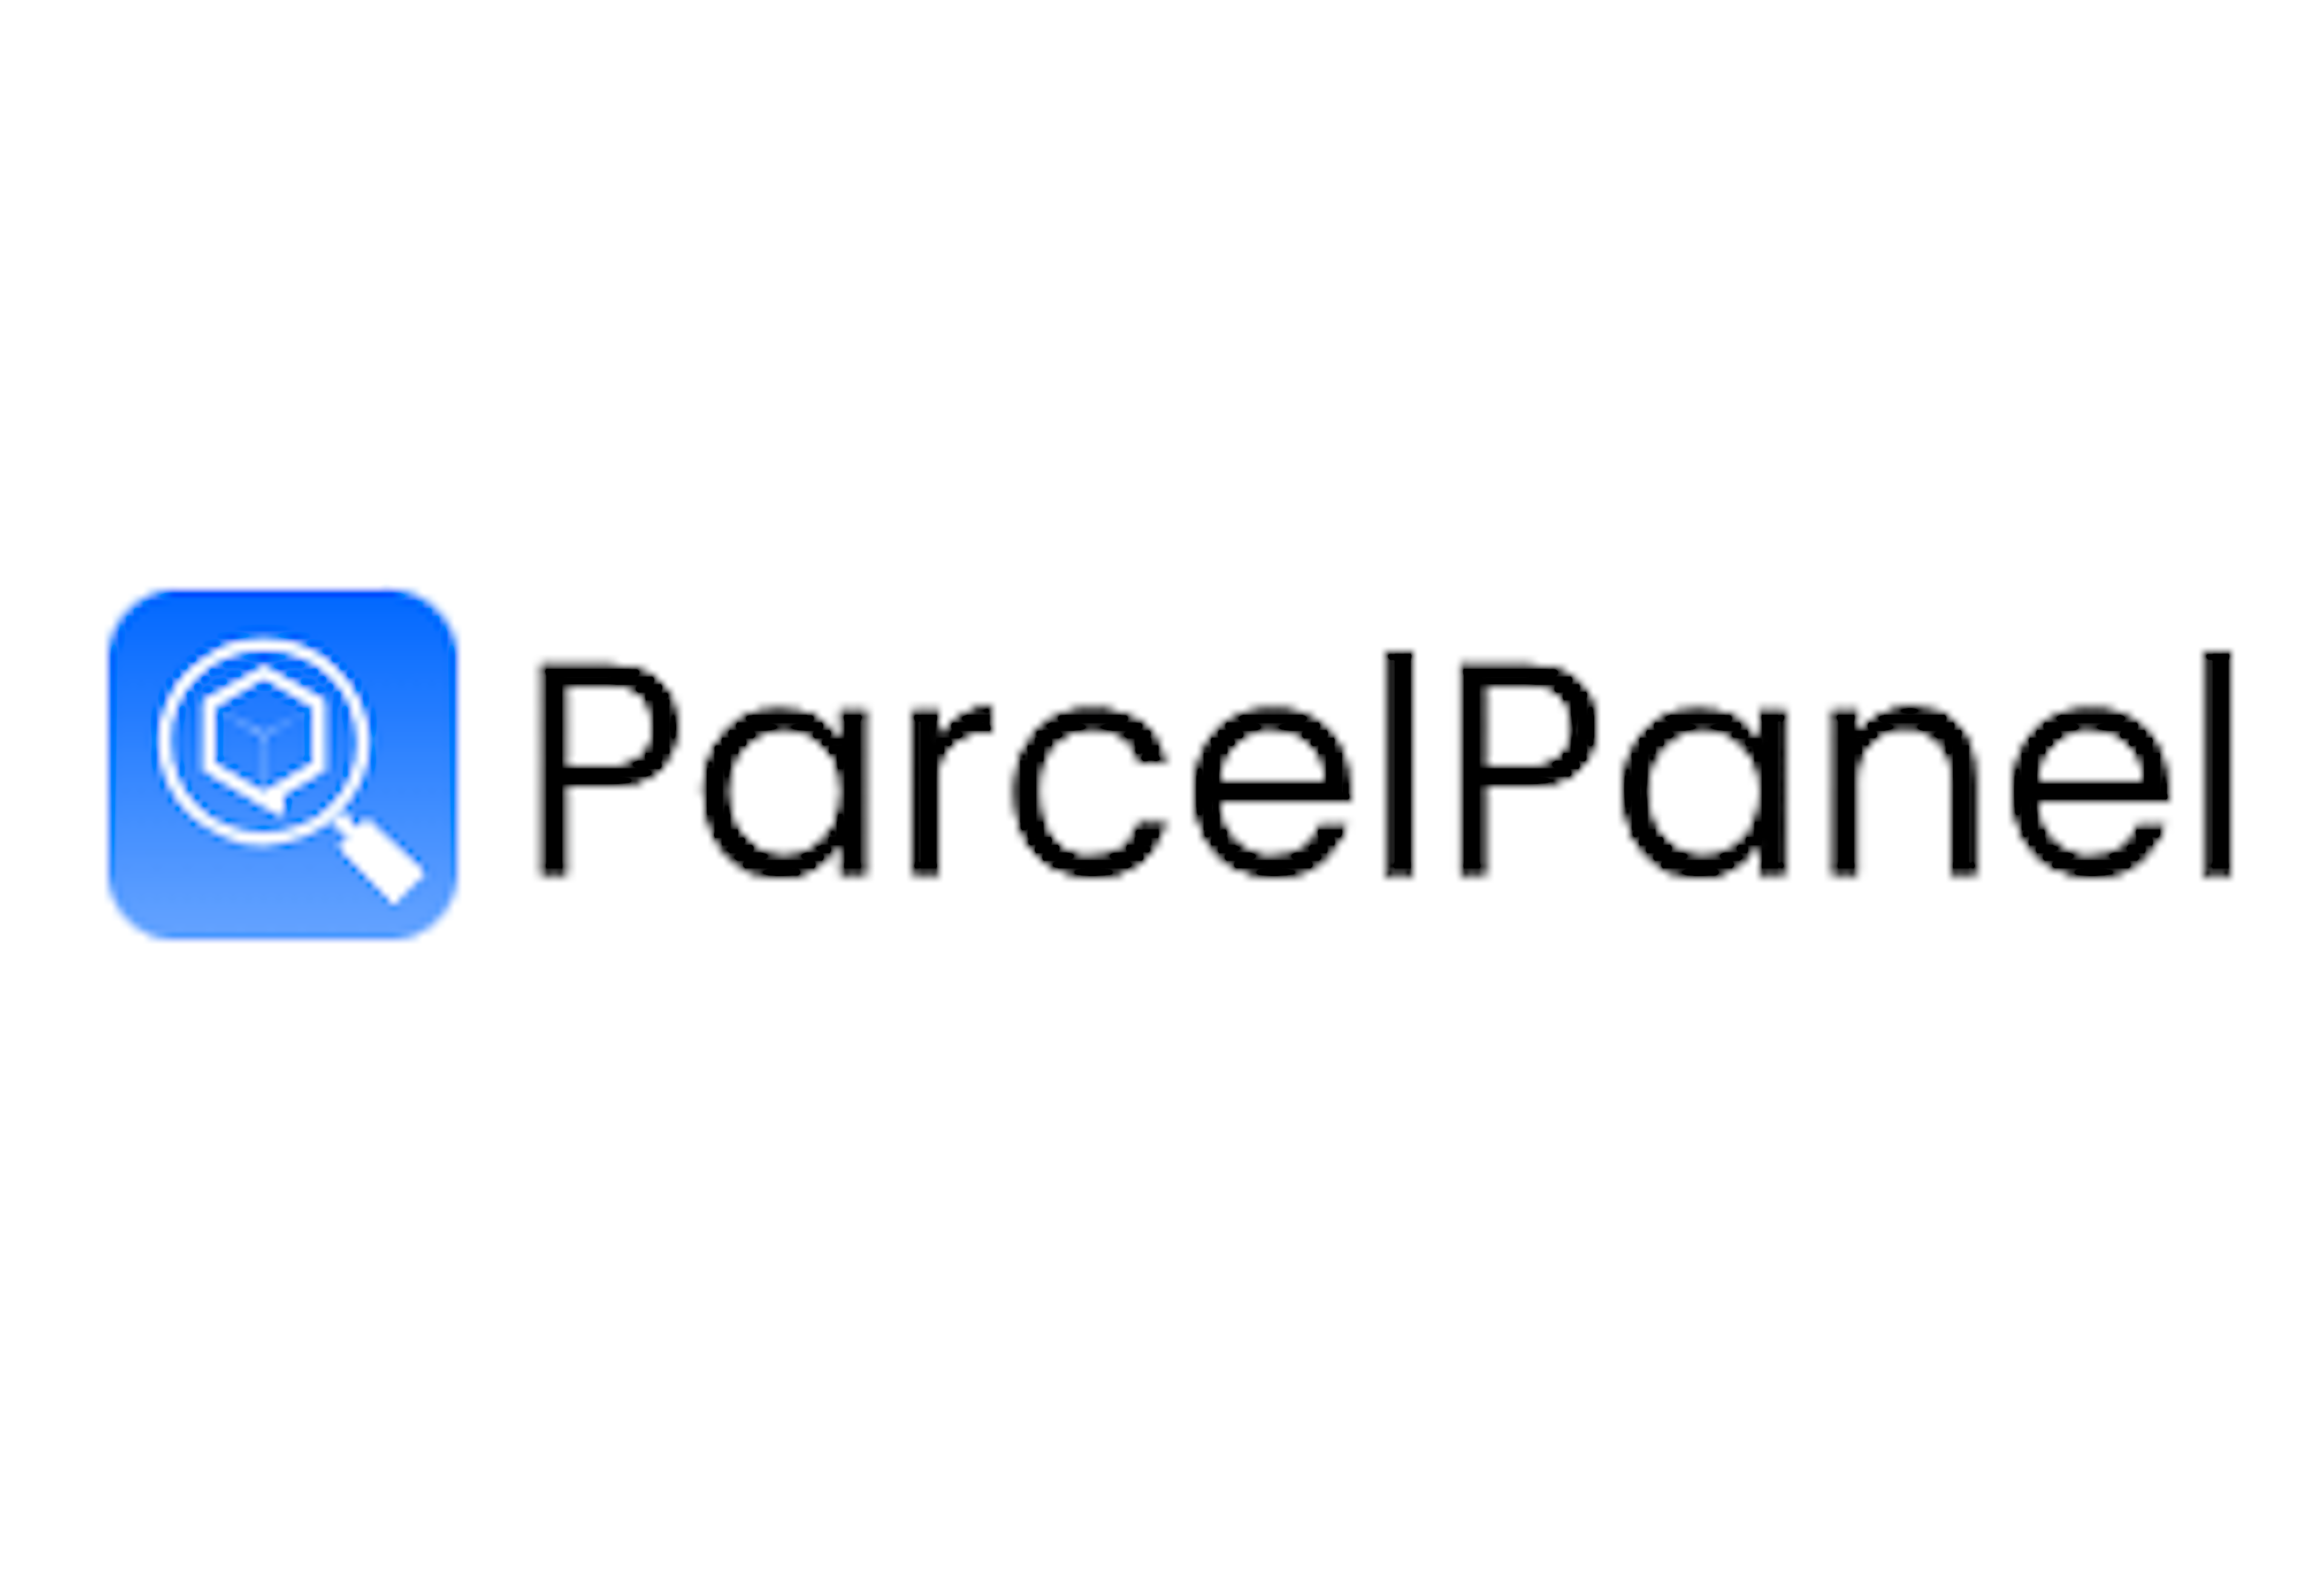 Parcel Panel Logo